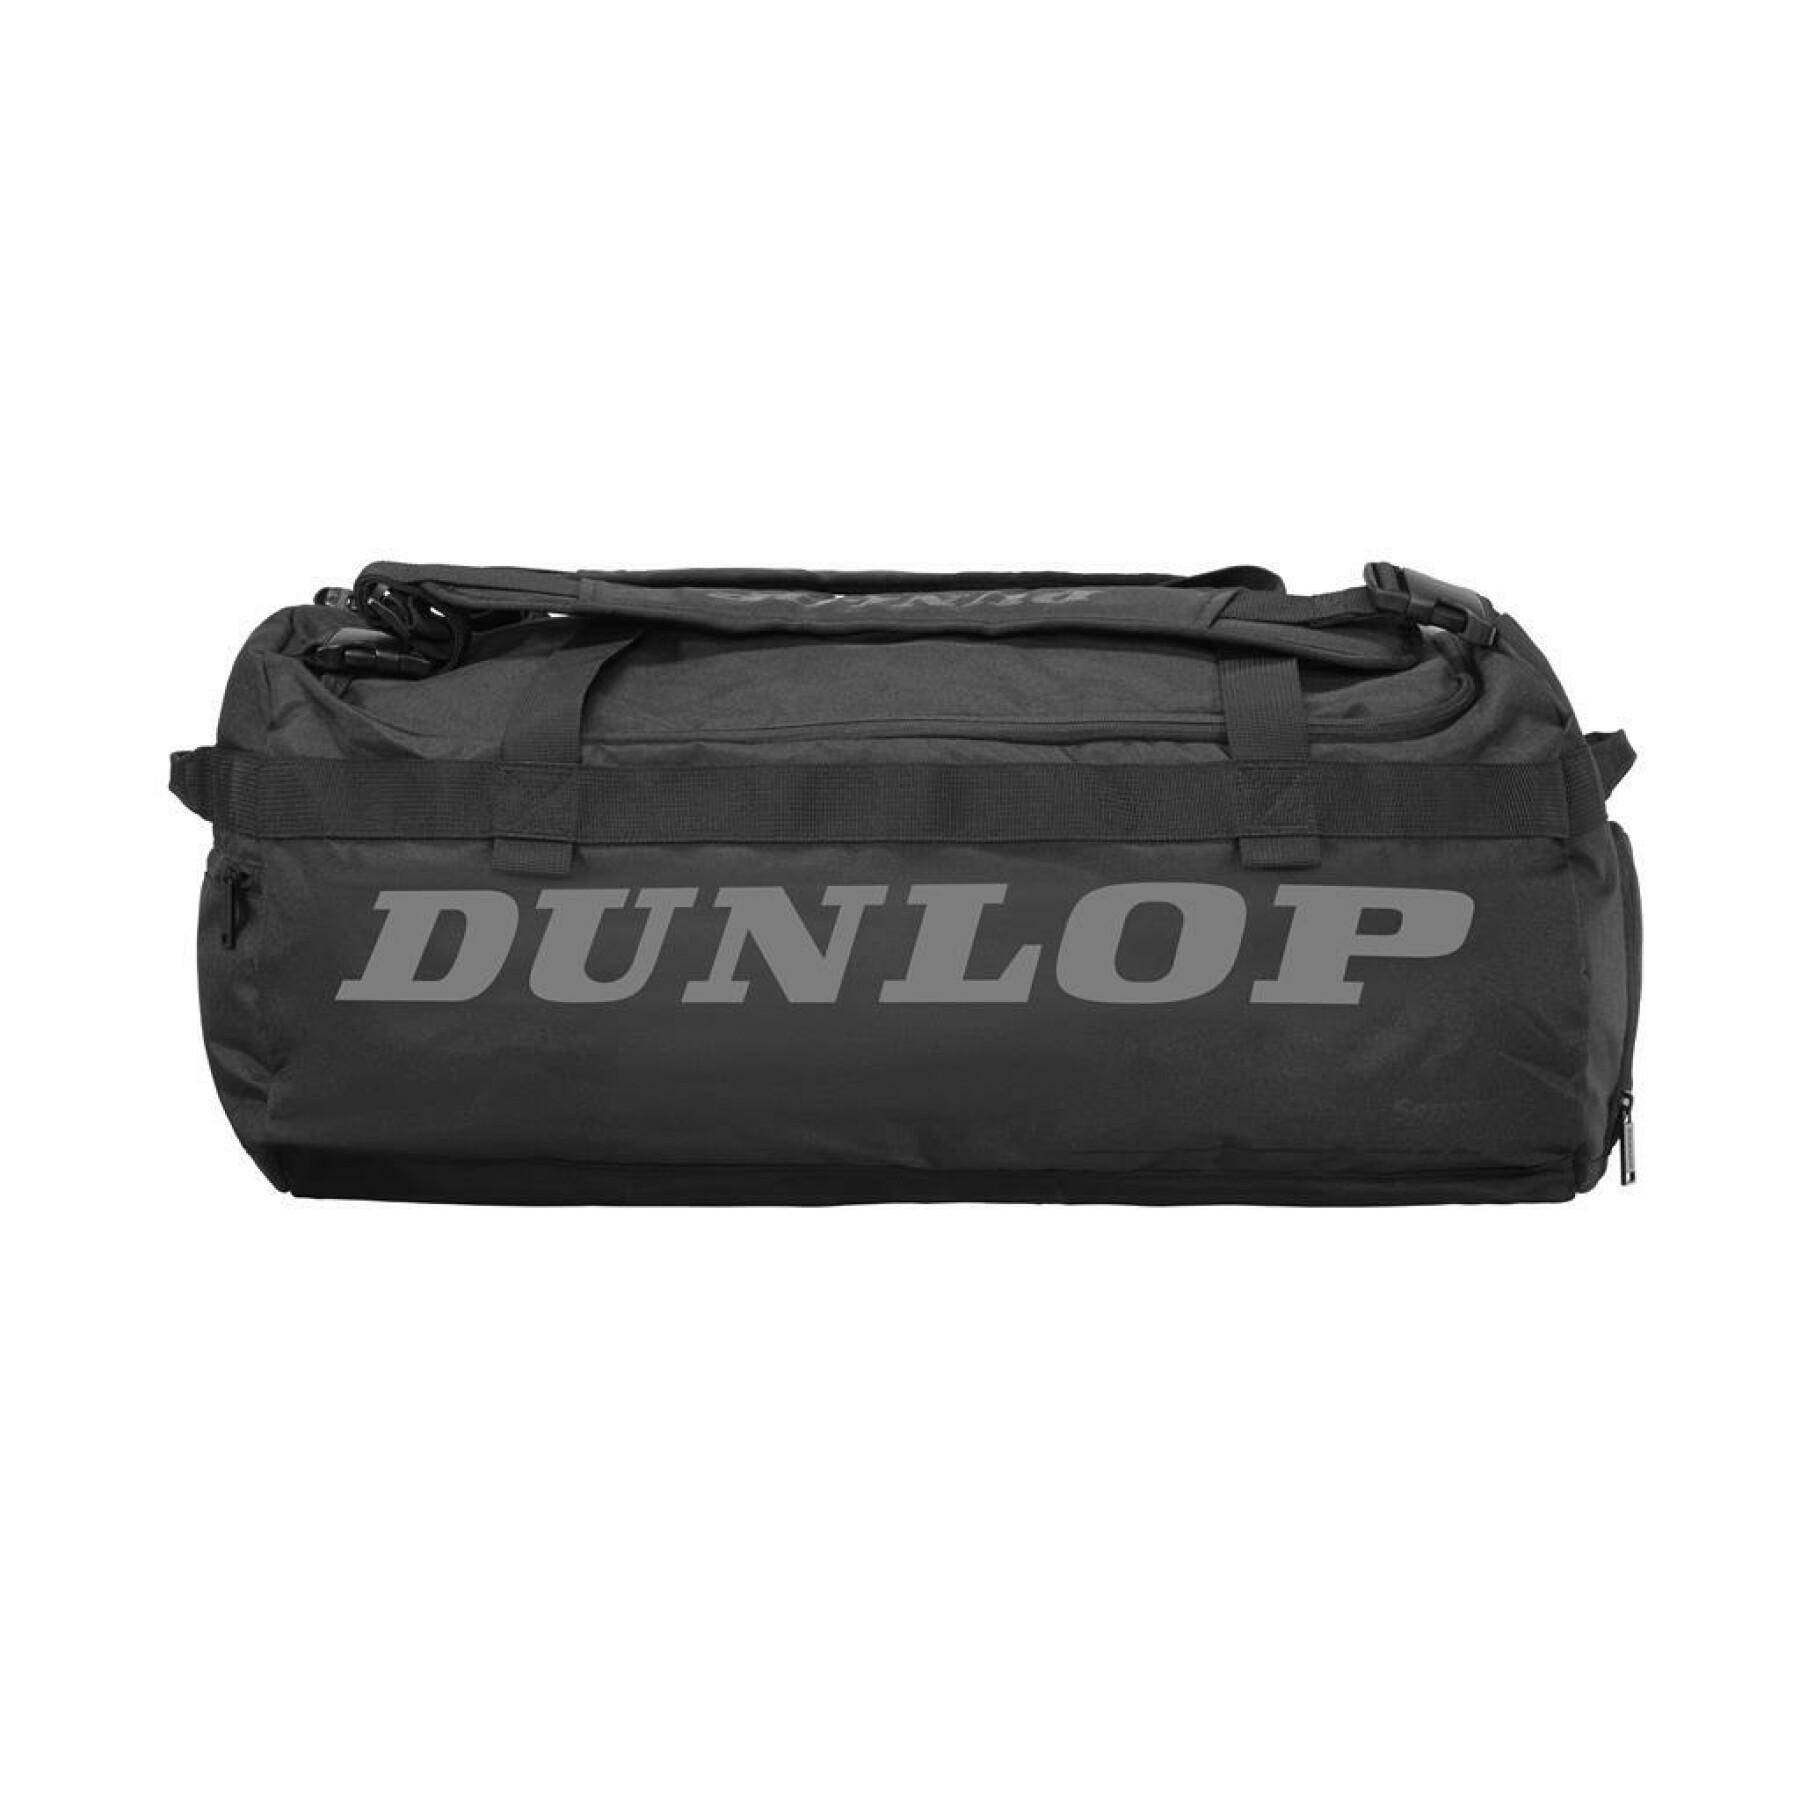 Bolsa de raqueta Dunlop cx performance